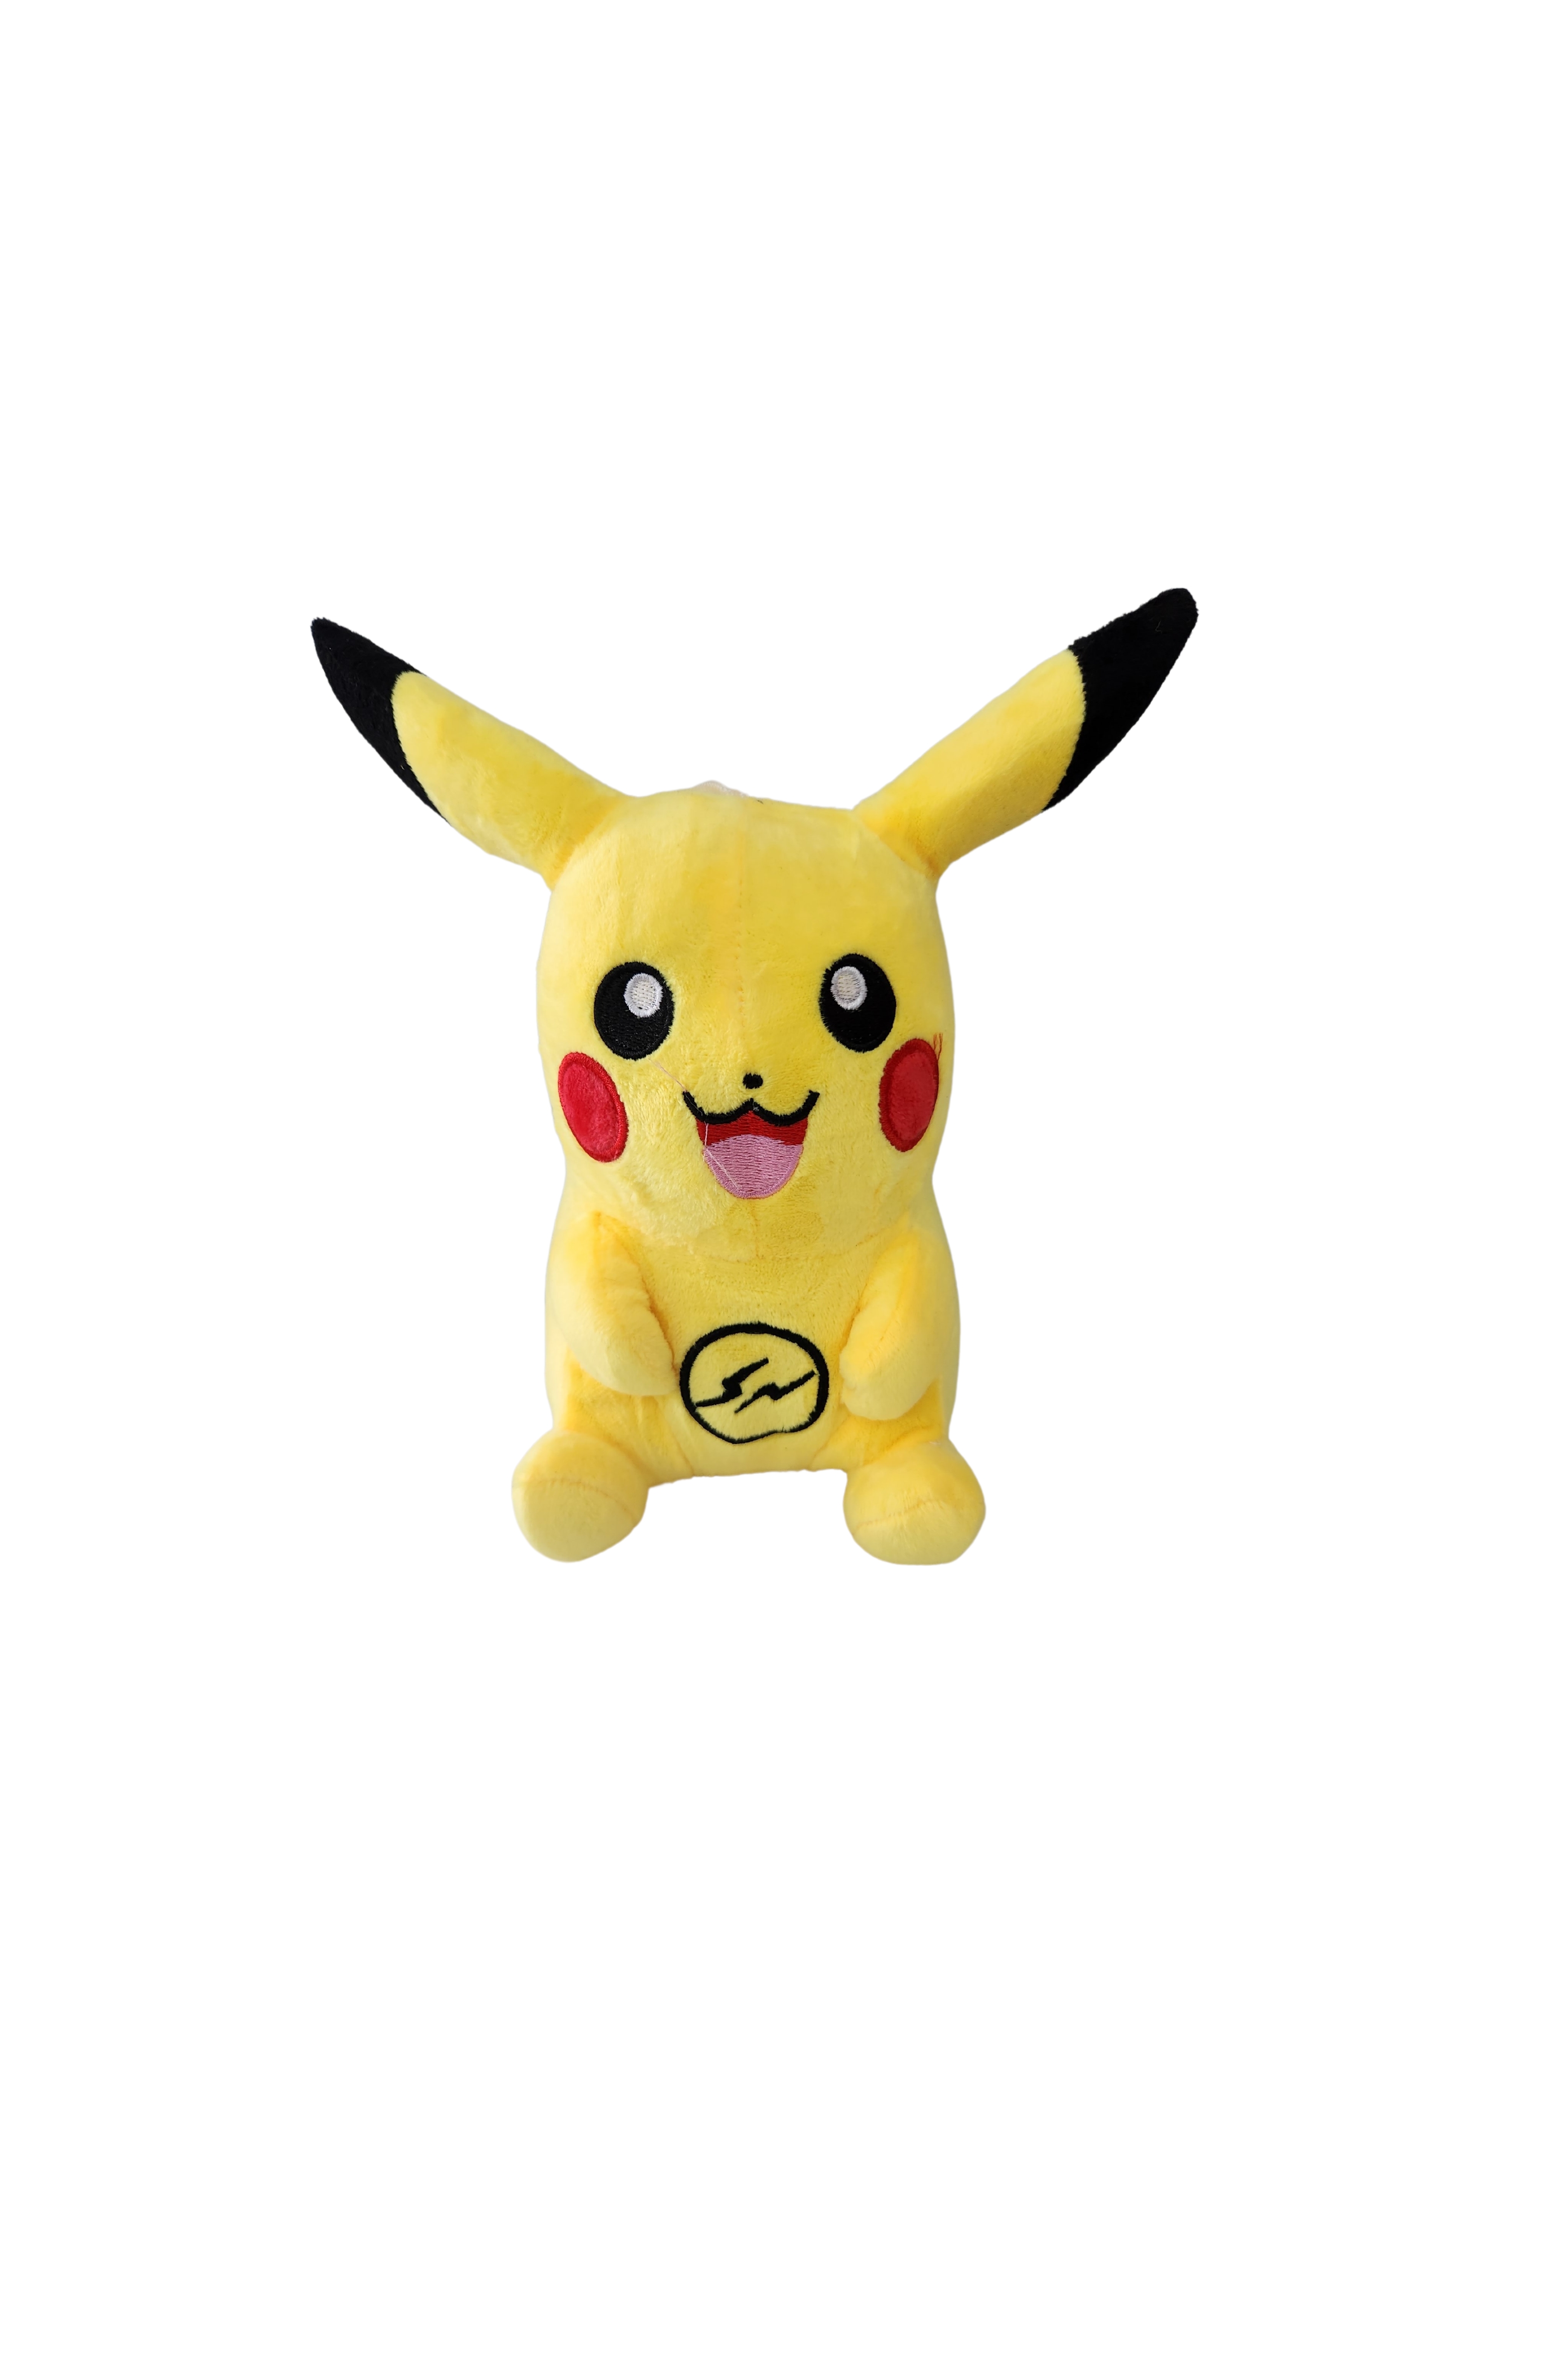 25cm Pikachu Plush